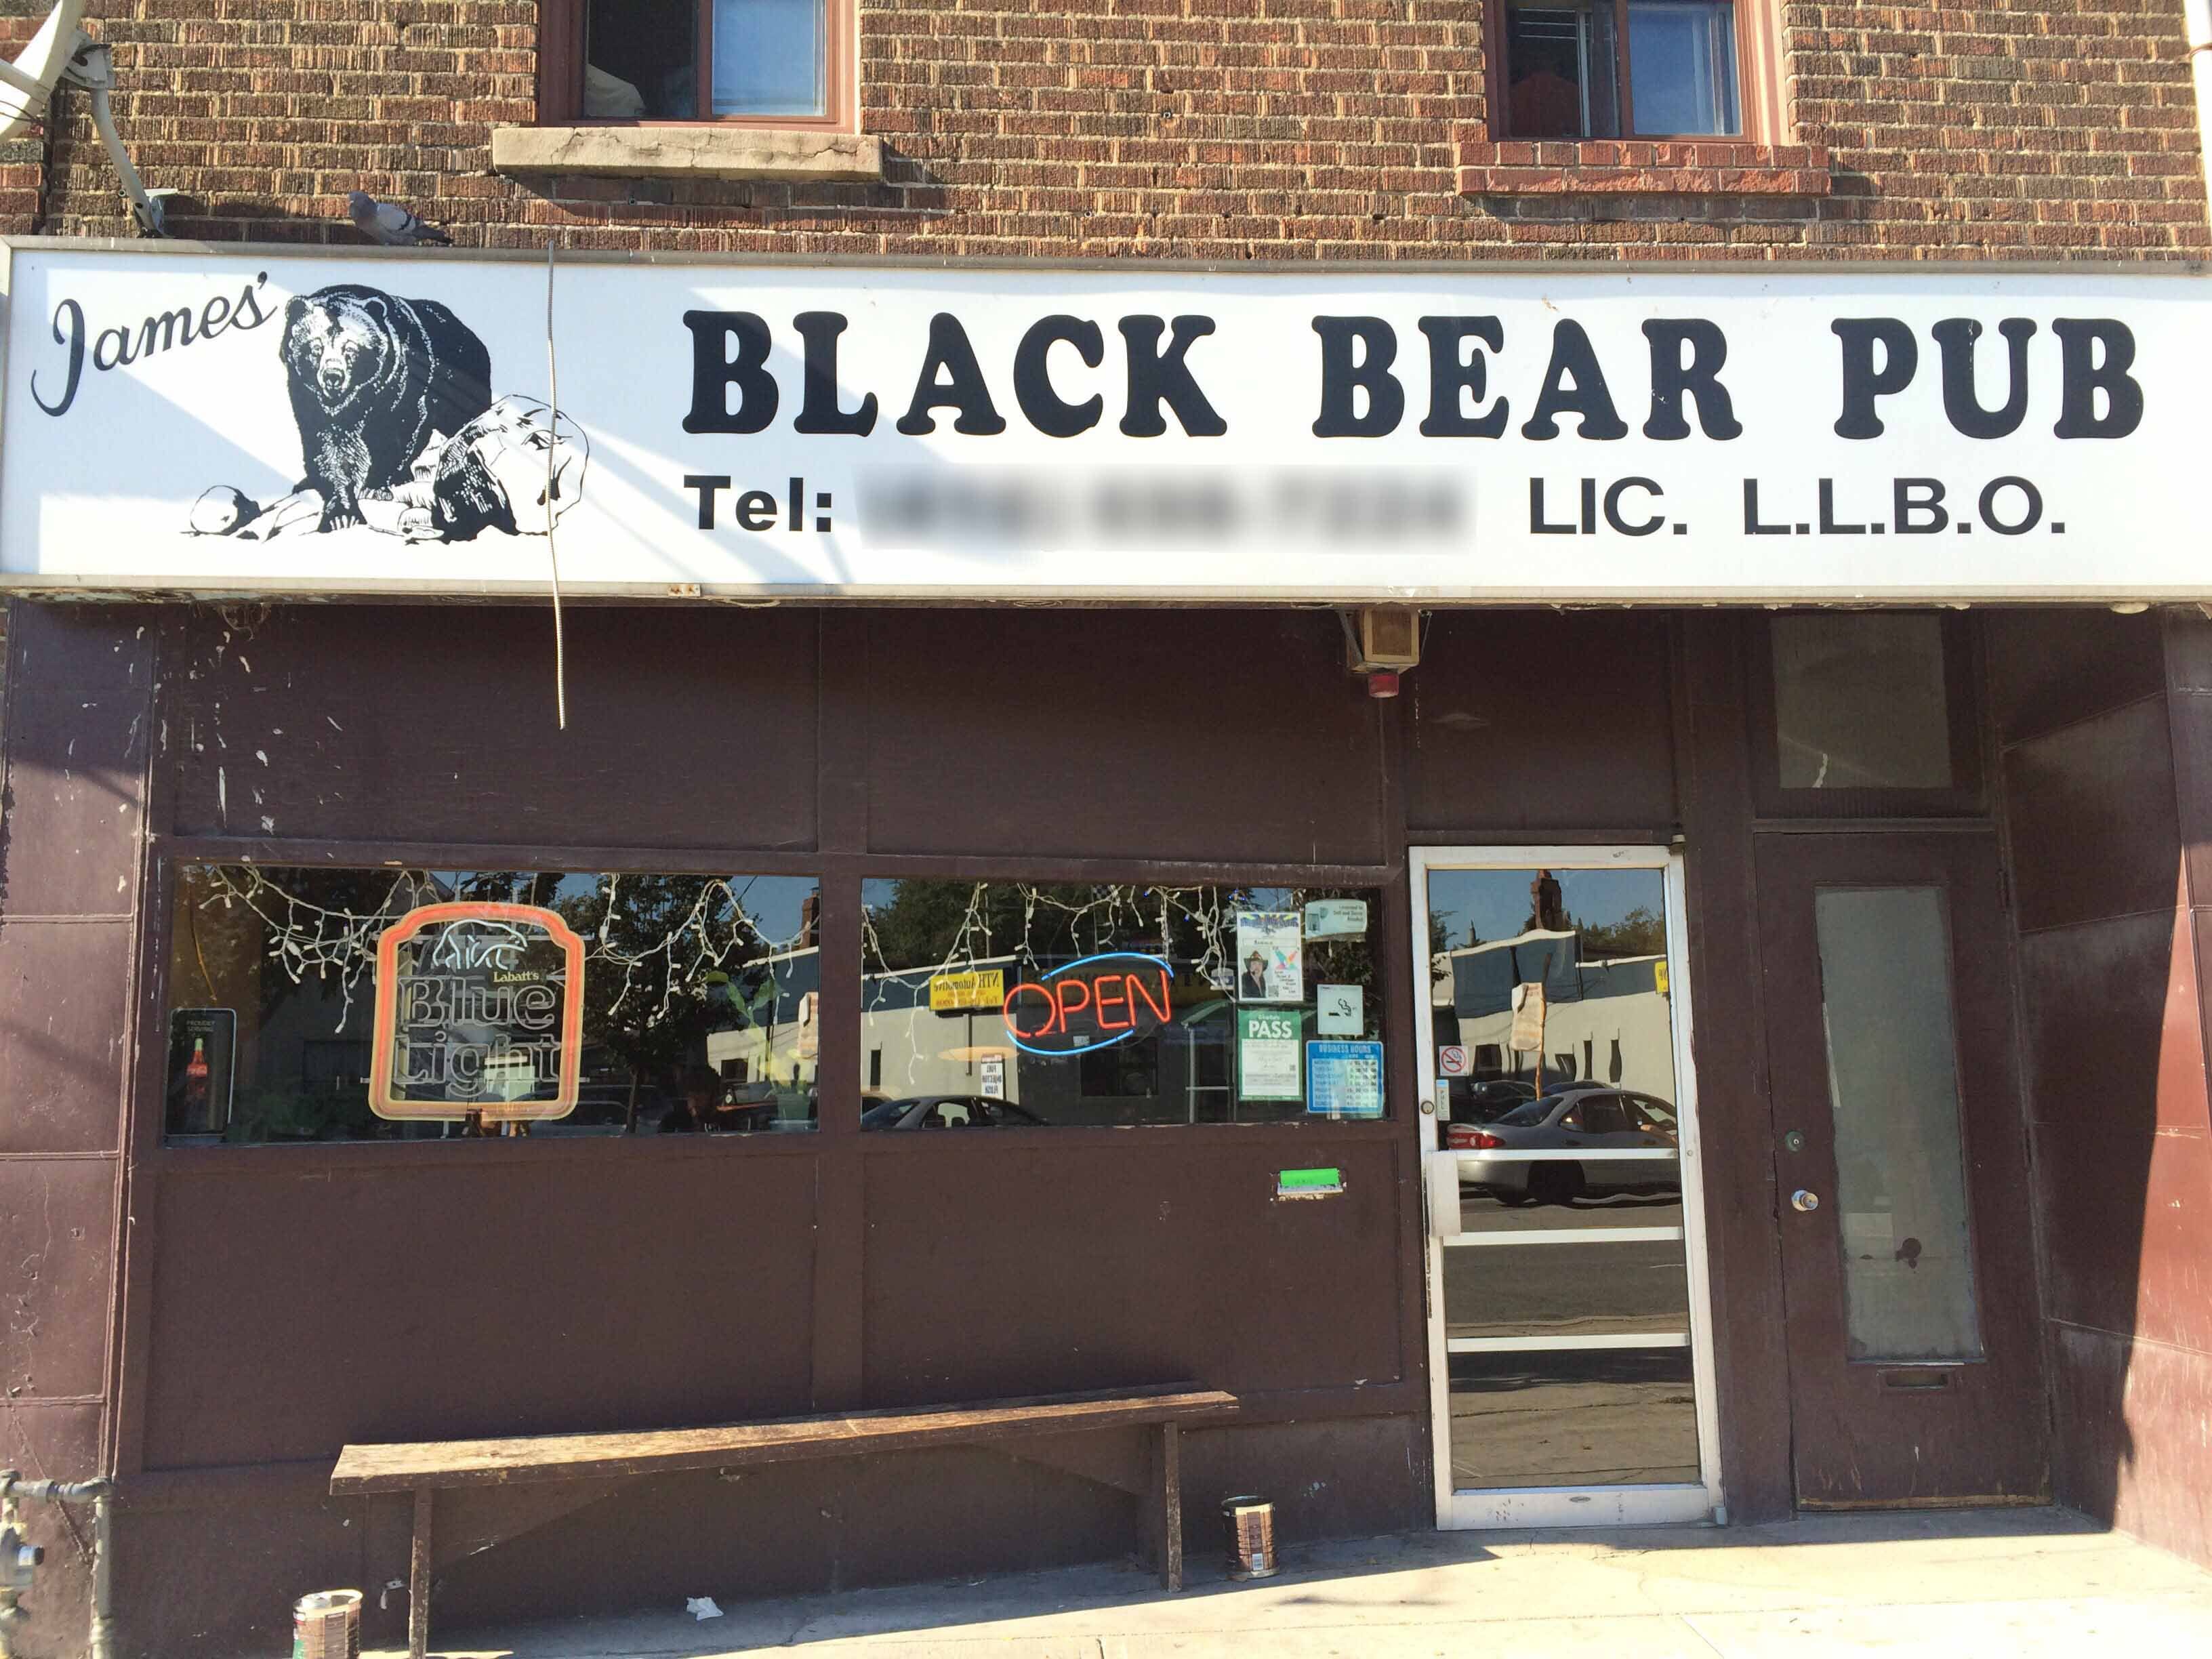 James' Black Bear Pub